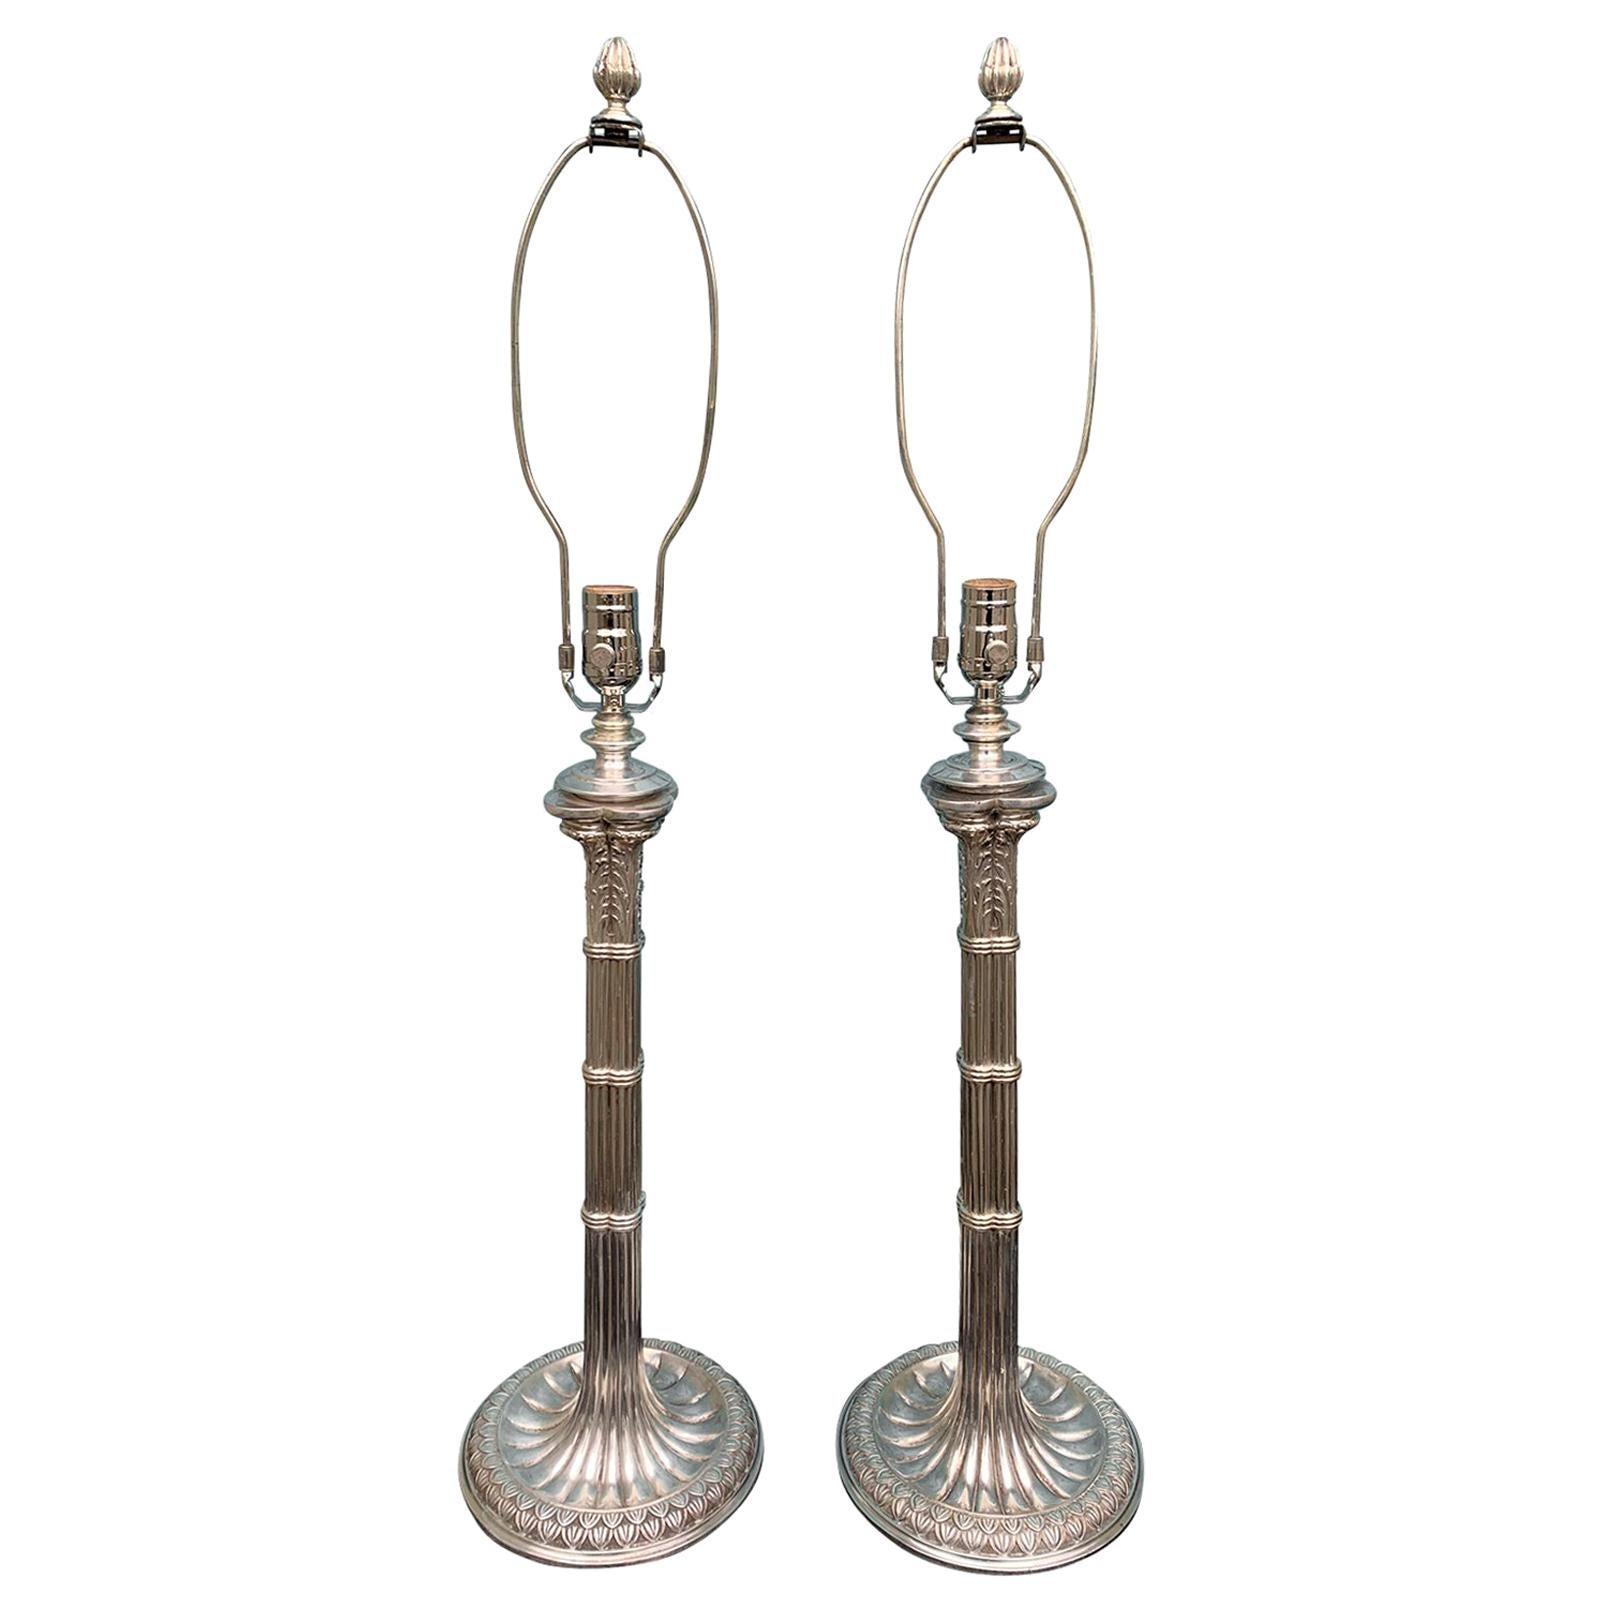 Pair of English Prob. Edwardian Silver Plated Column Lamps, circa 1900